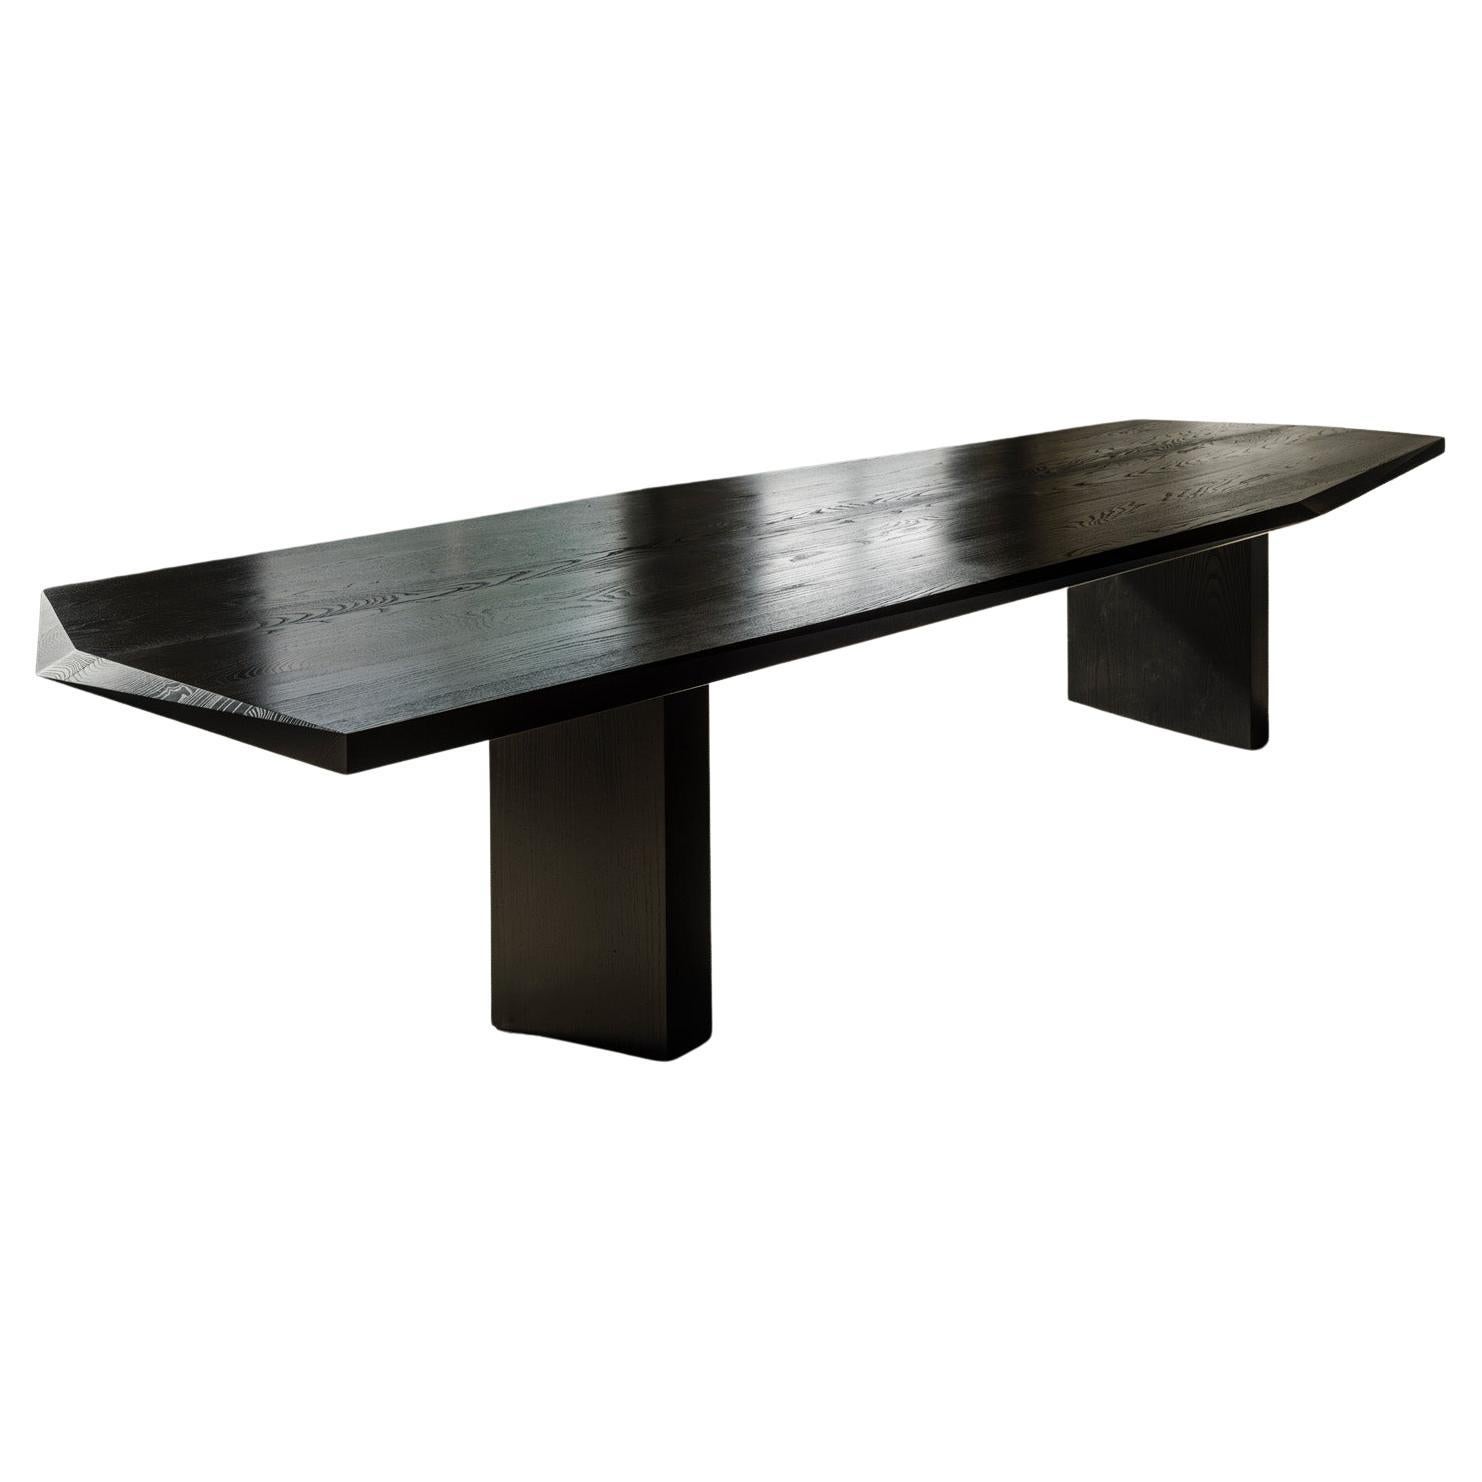 Hera 360 Table by Tim Vranken For Sale